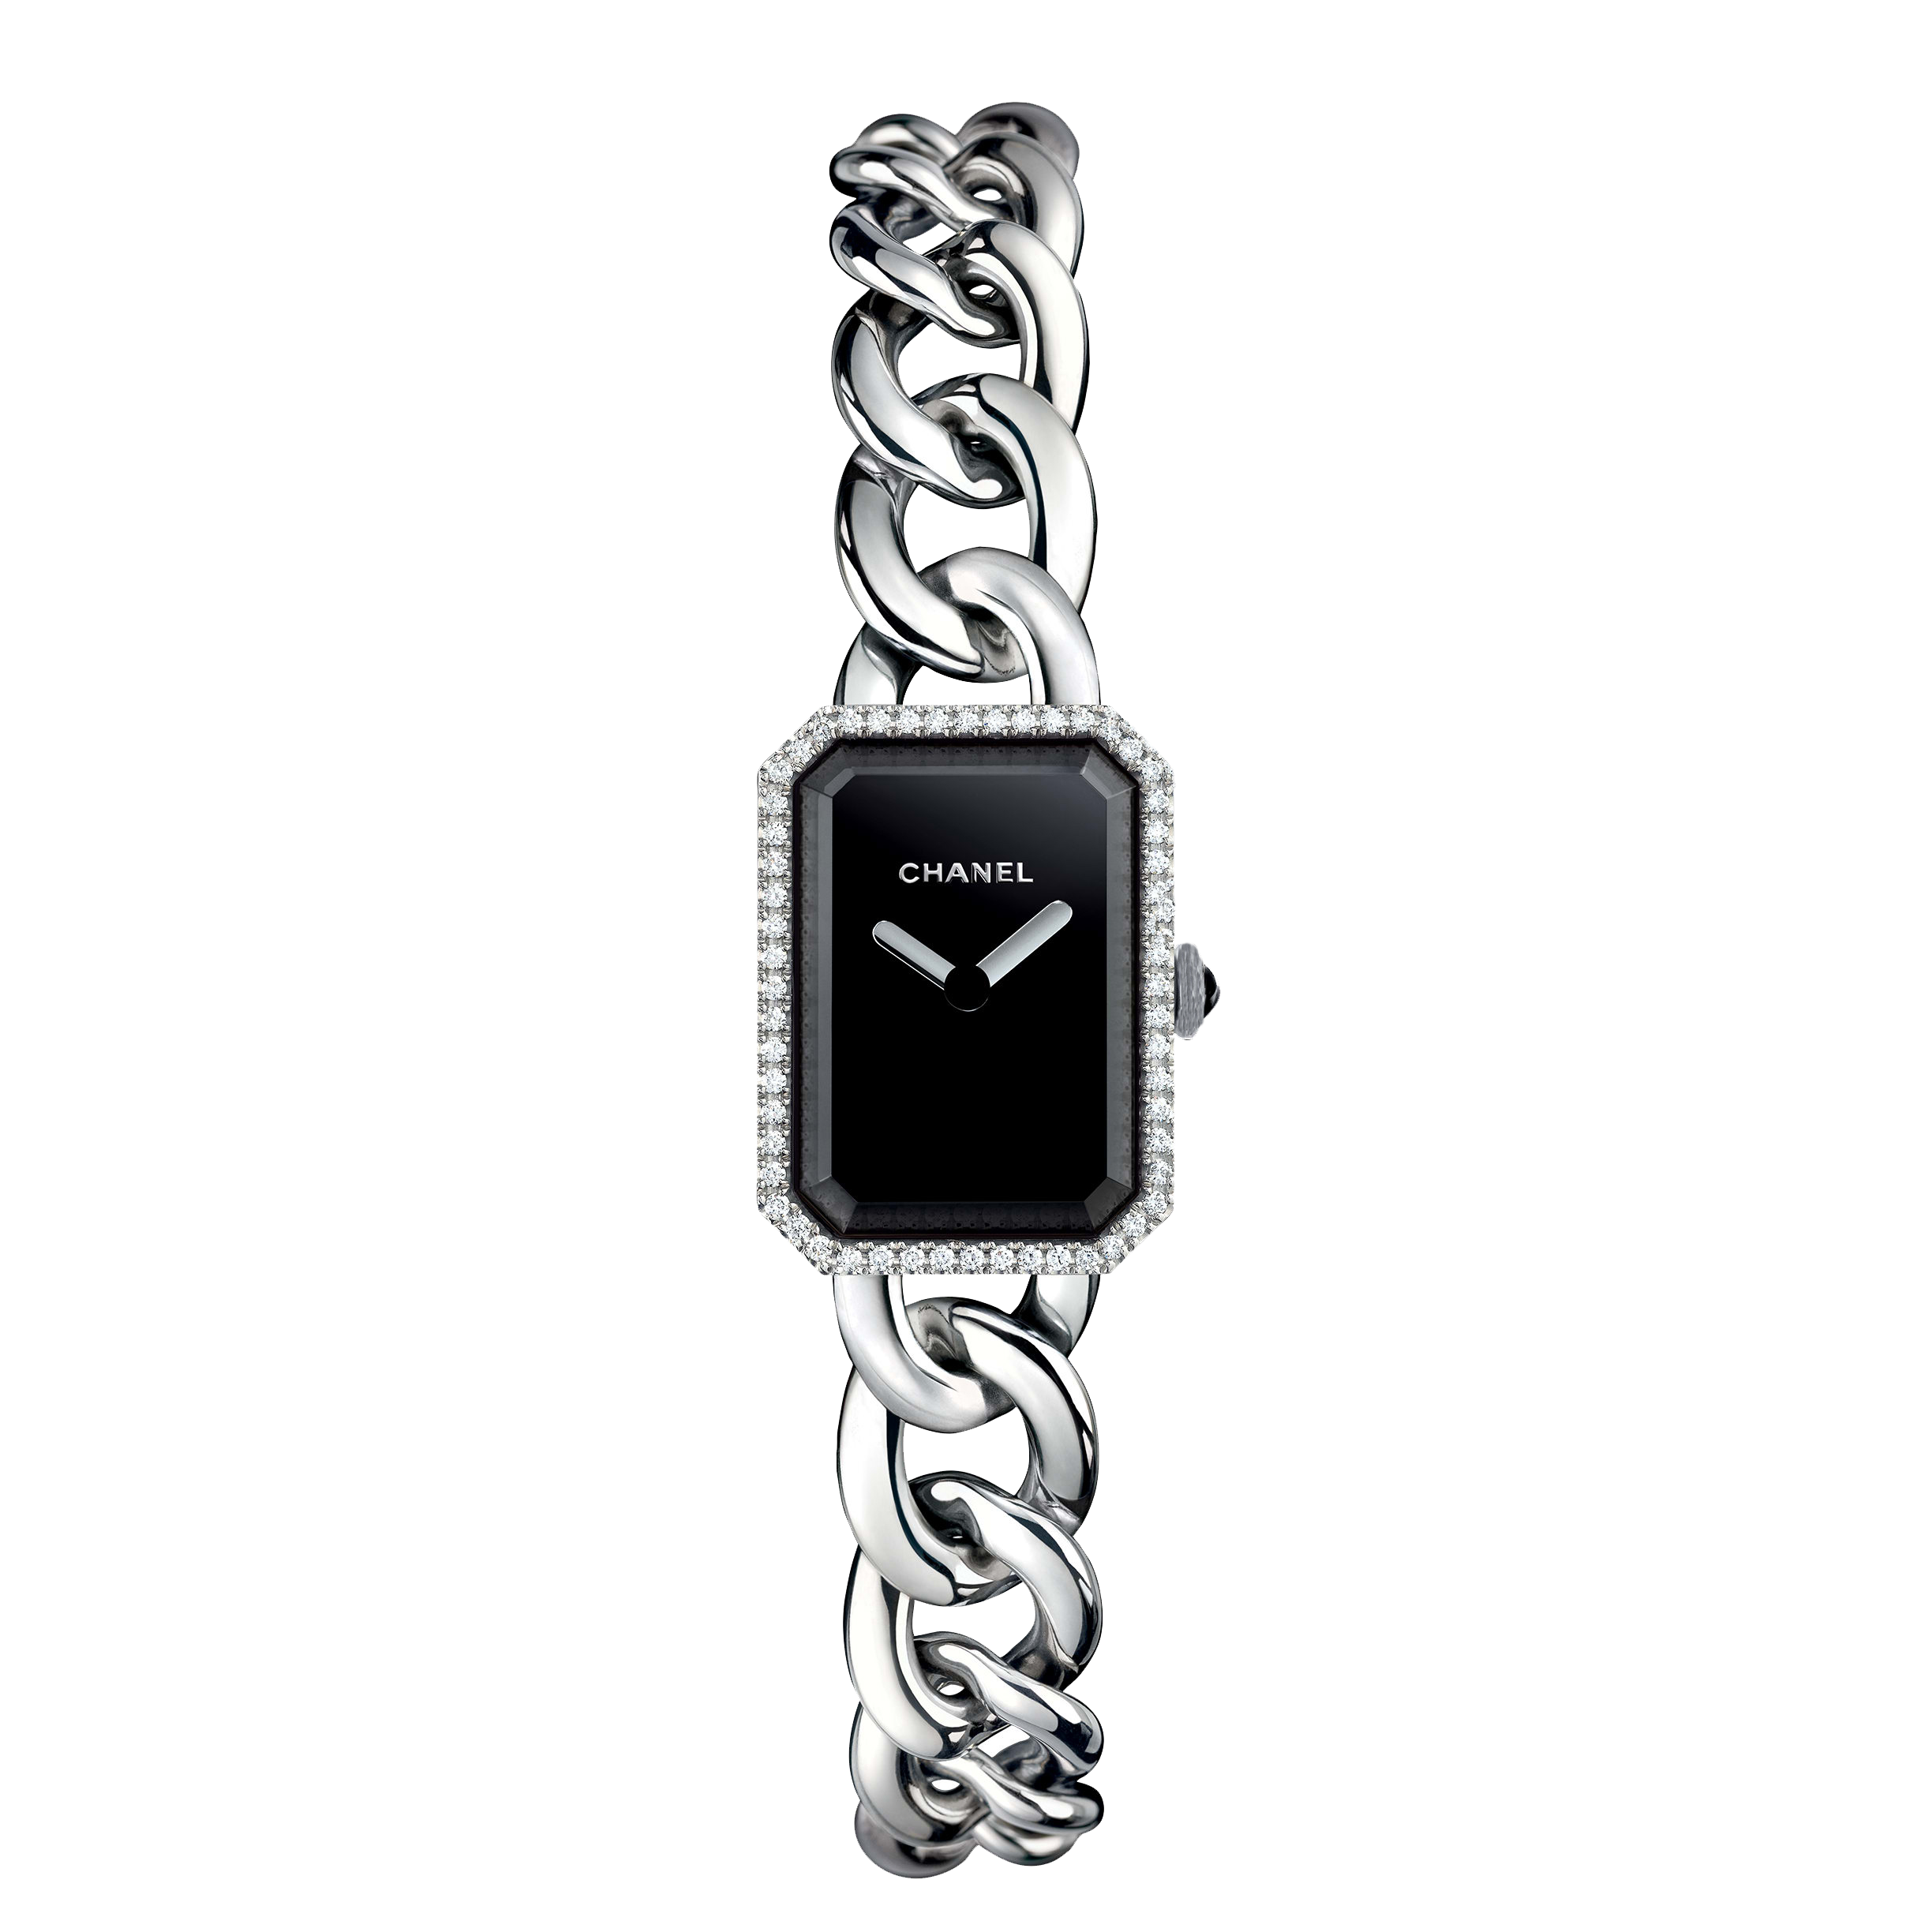 Details more than 159 chanel premiere chain watch latest - vietkidsiq ...